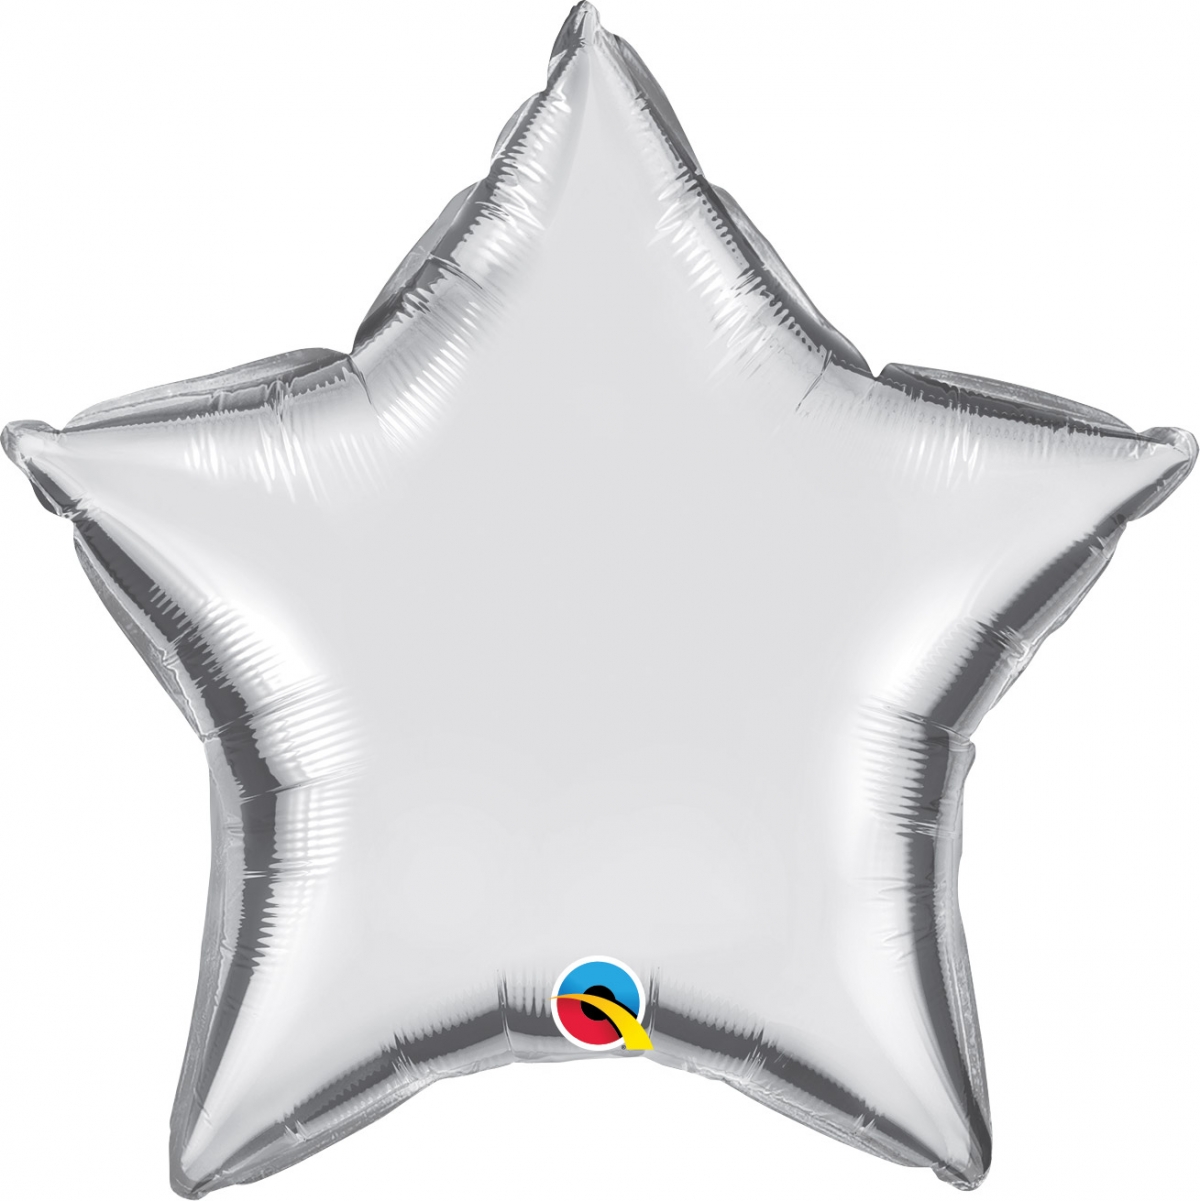 20" Foil Star Silver balloon